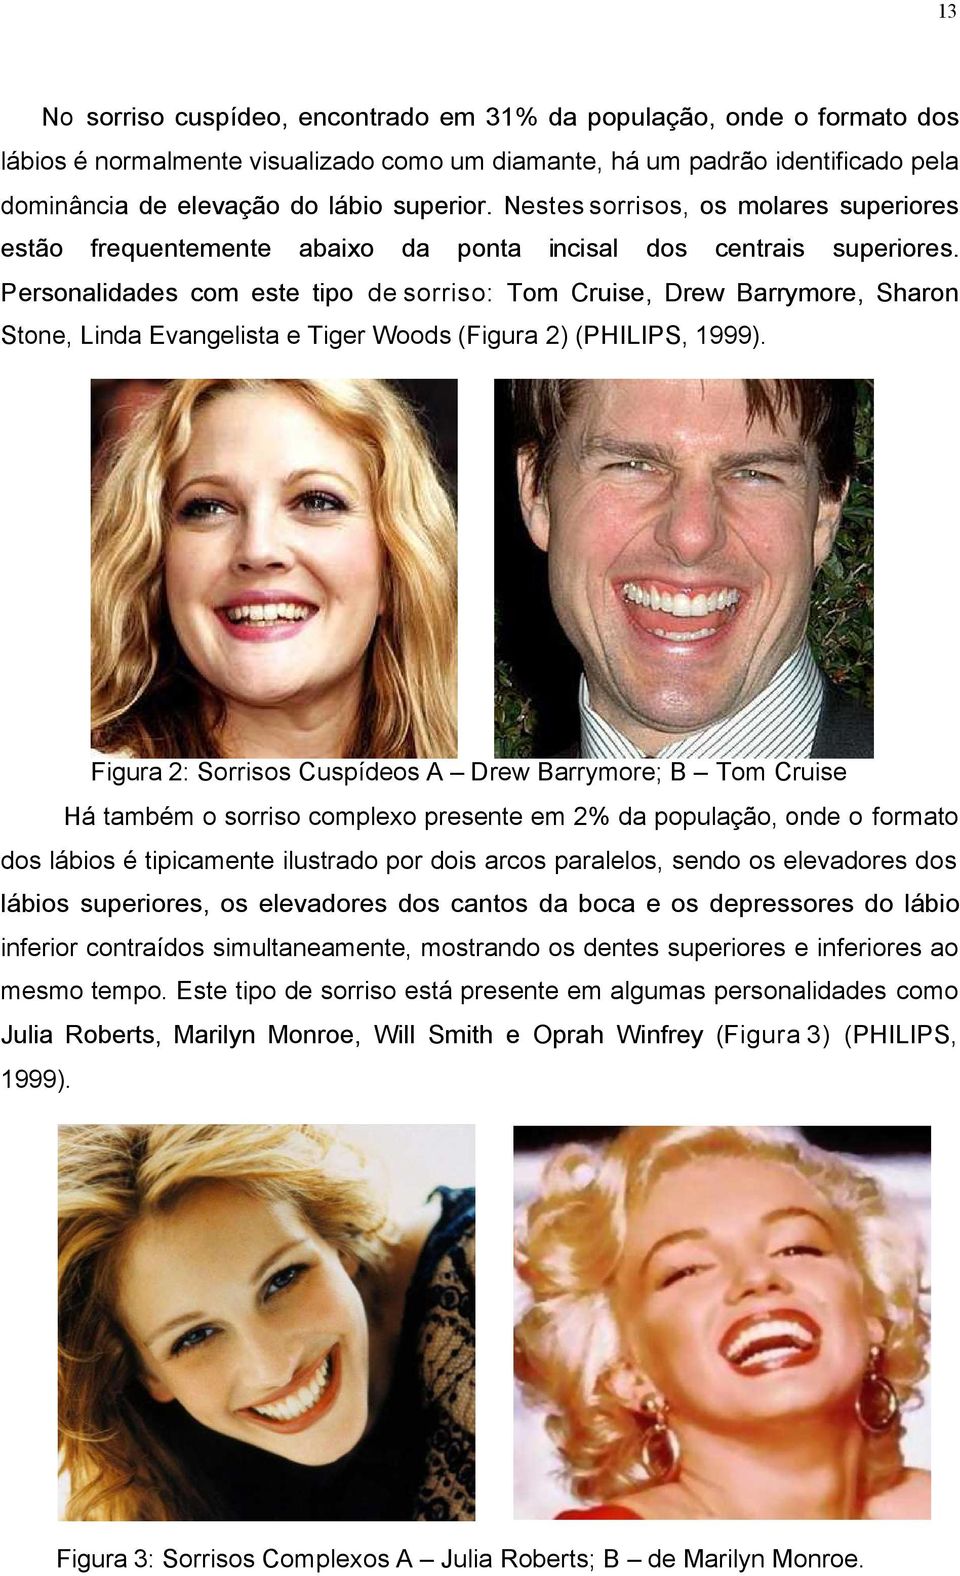 Personalidades com este tipo de sorriso: Tom Cruise, Drew Barrymore, Sharon Stone, Linda Evangelista e Tiger Woods (Figura 2) (PHILIPS, 1999).